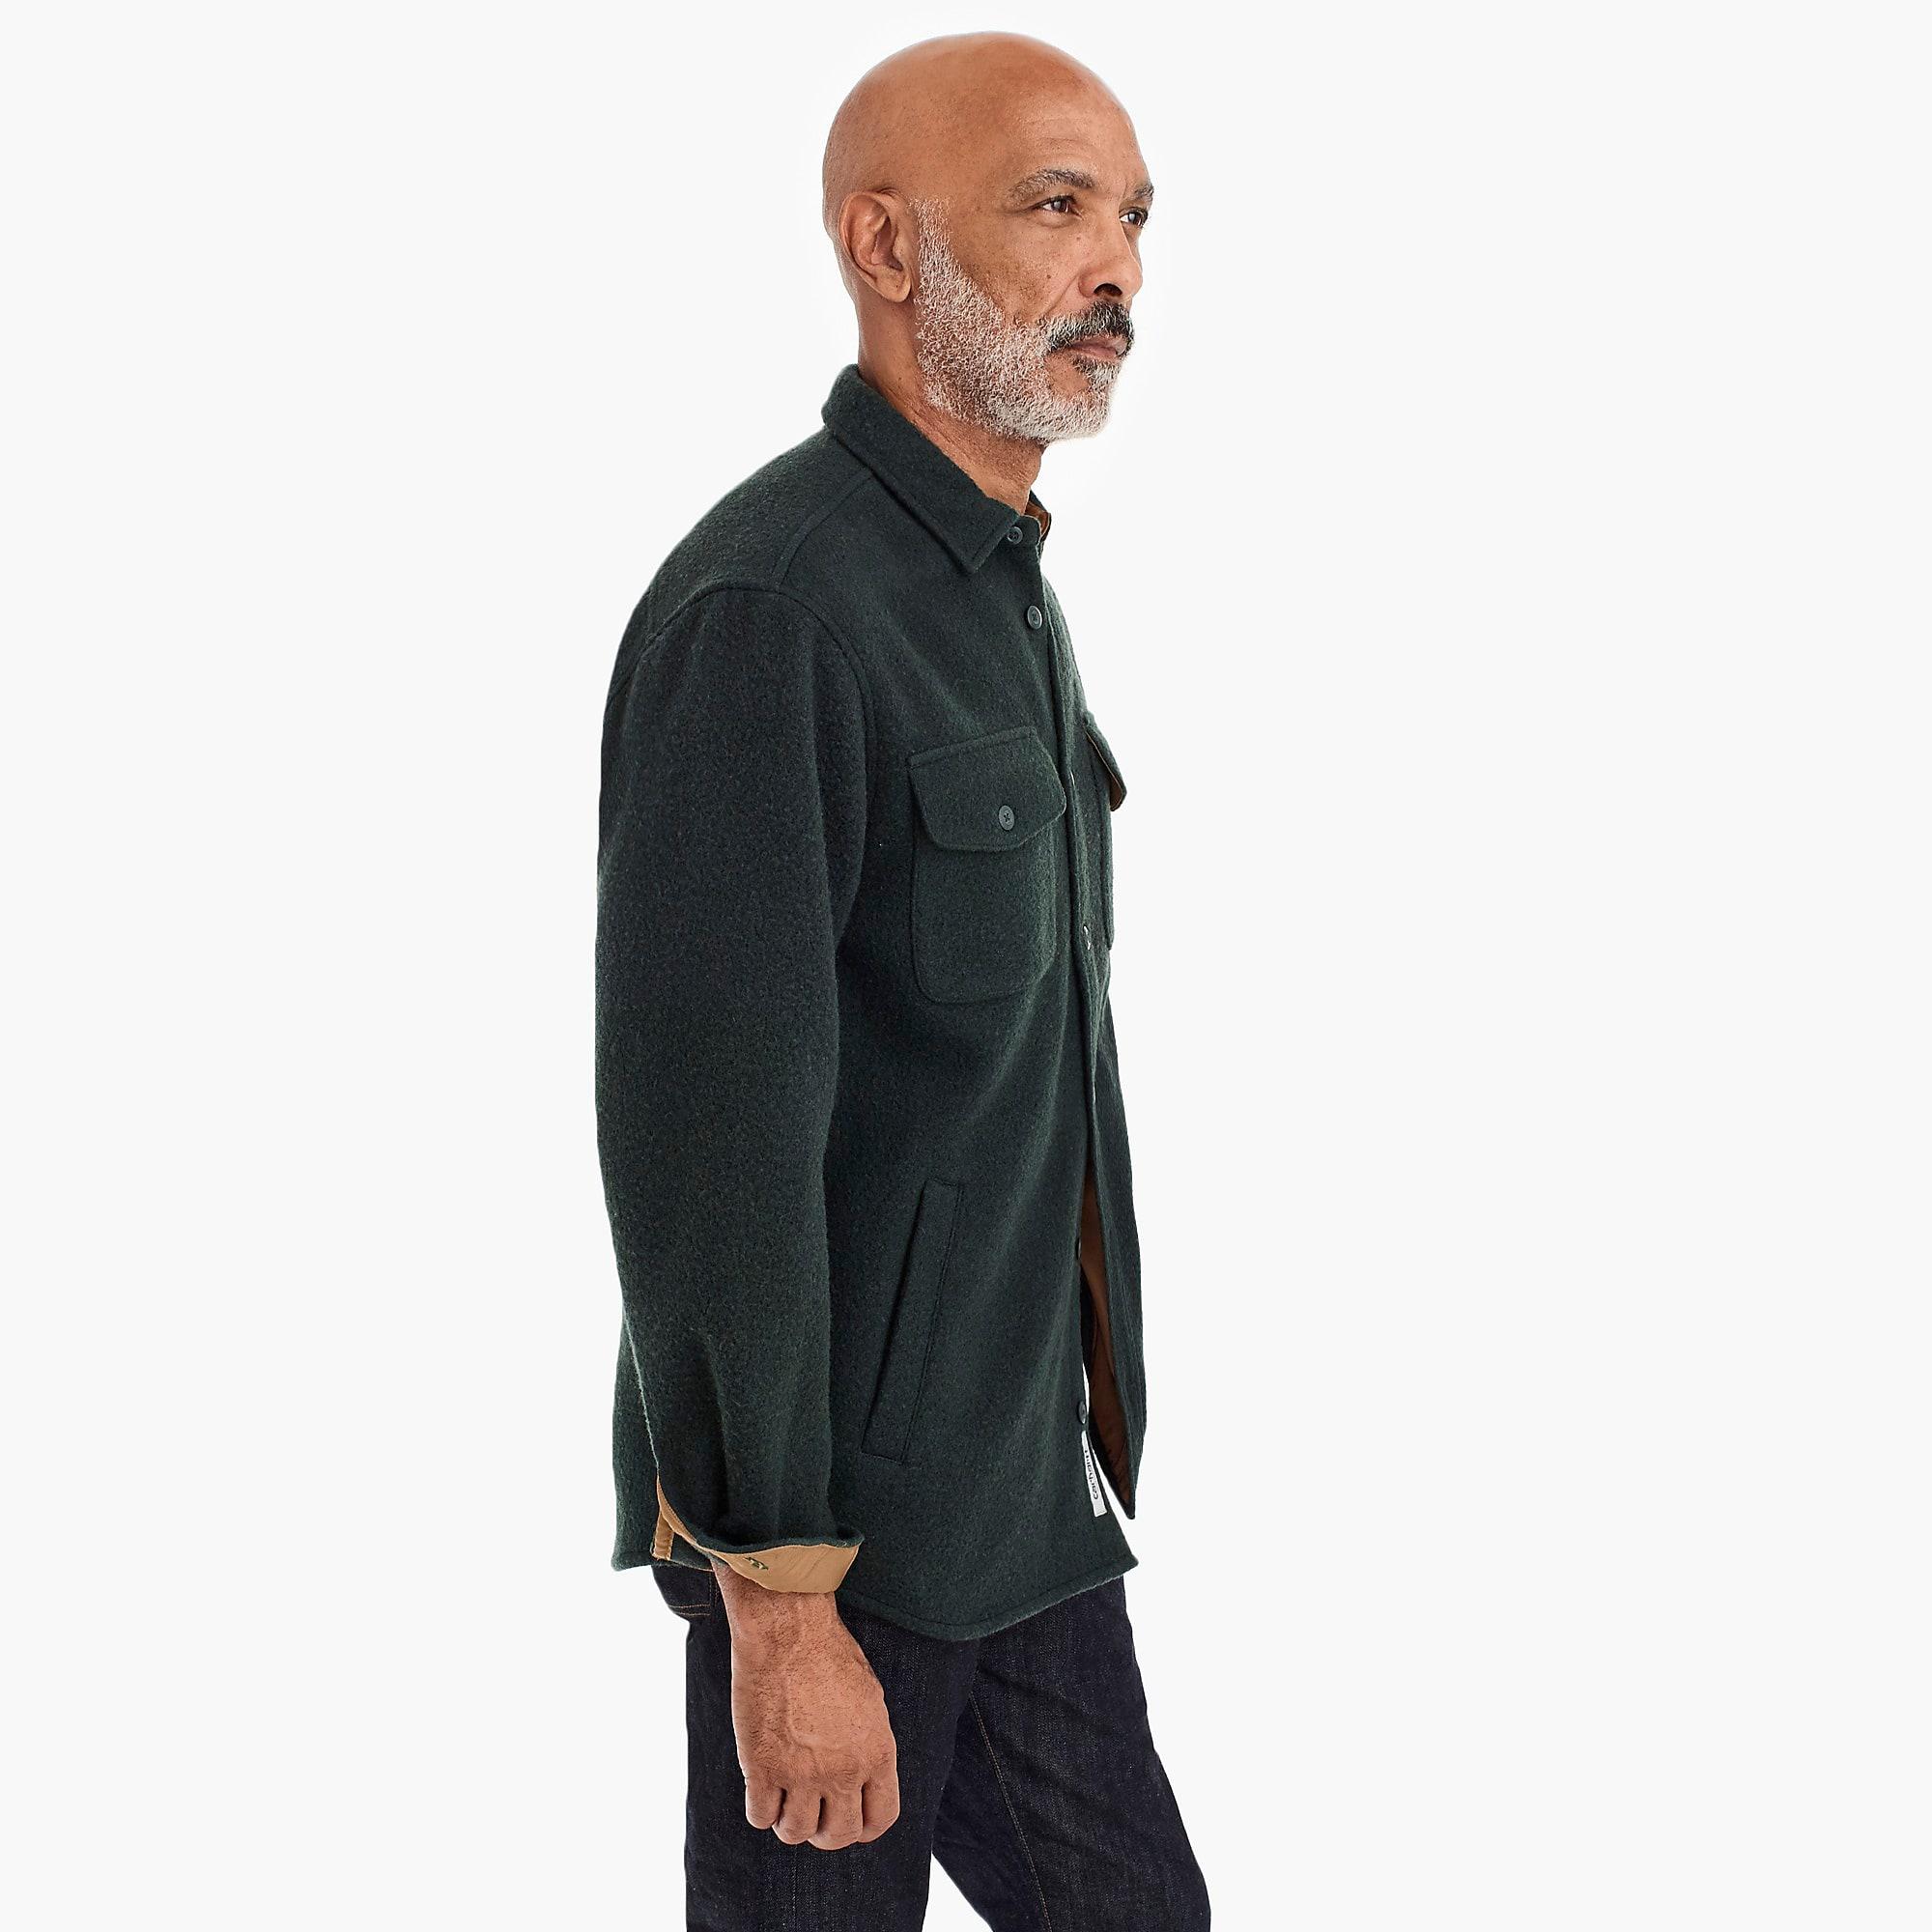 carhartt milner shirt jacket, Off 60%, www.scrimaglio.com